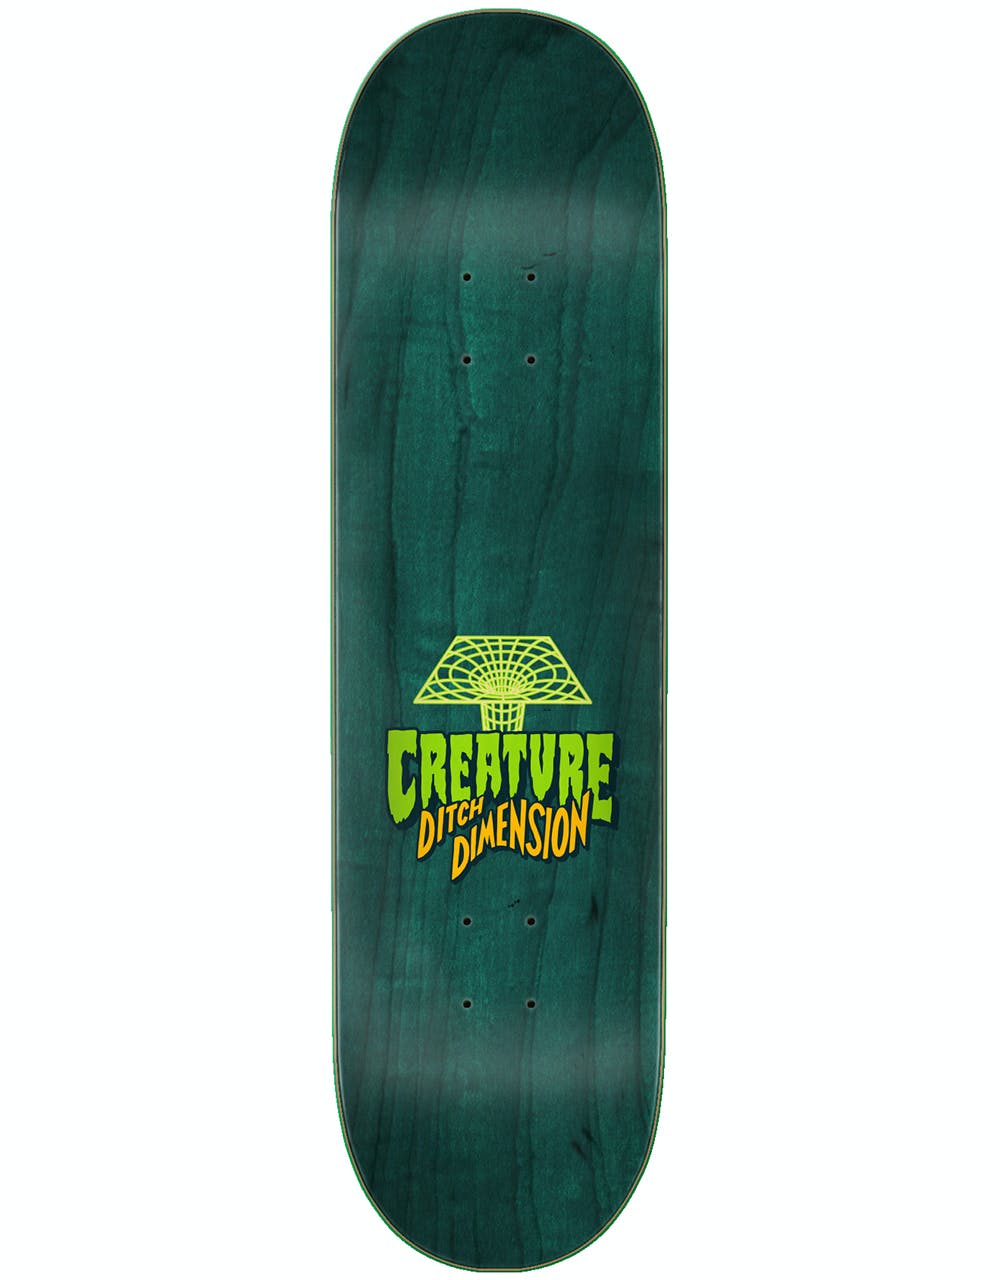 Creature Reyes Ditch Dimension Skateboard Deck - 8"